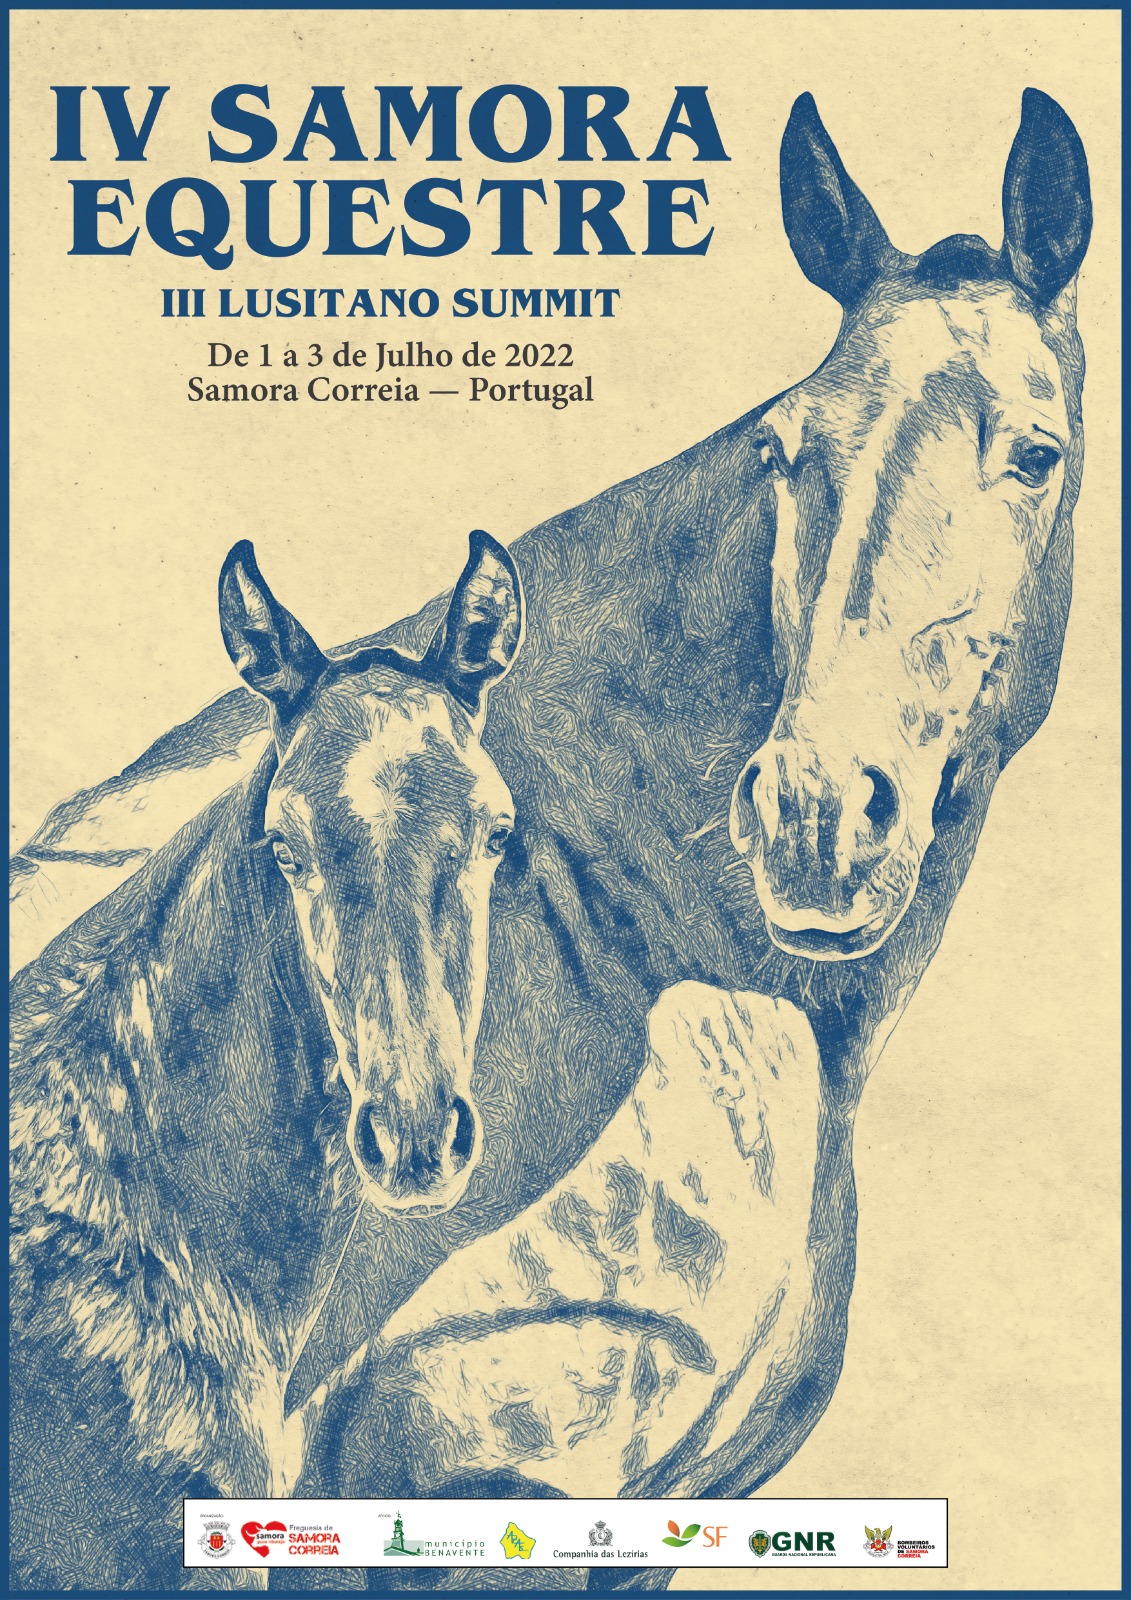 Imagem IV Samora Equestre - III Lusitano Summit